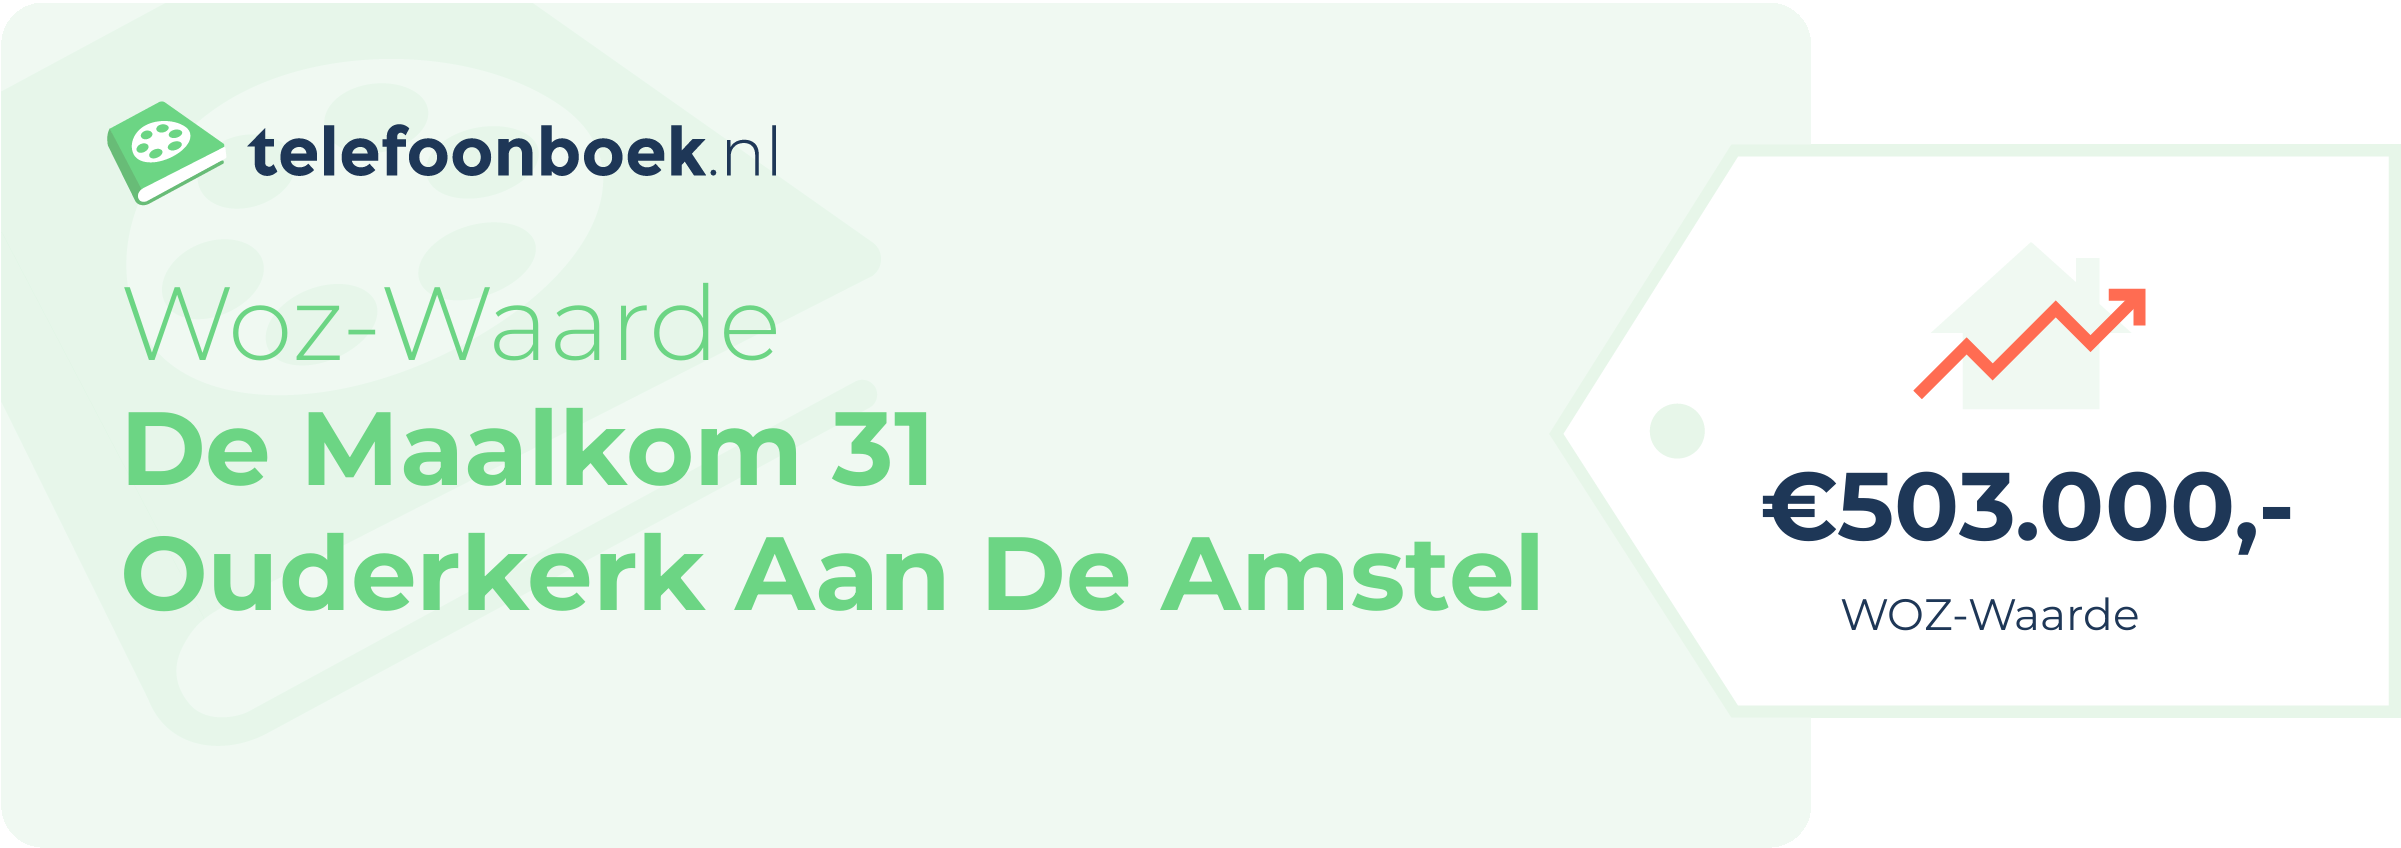 WOZ-waarde De Maalkom 31 Ouderkerk Aan De Amstel